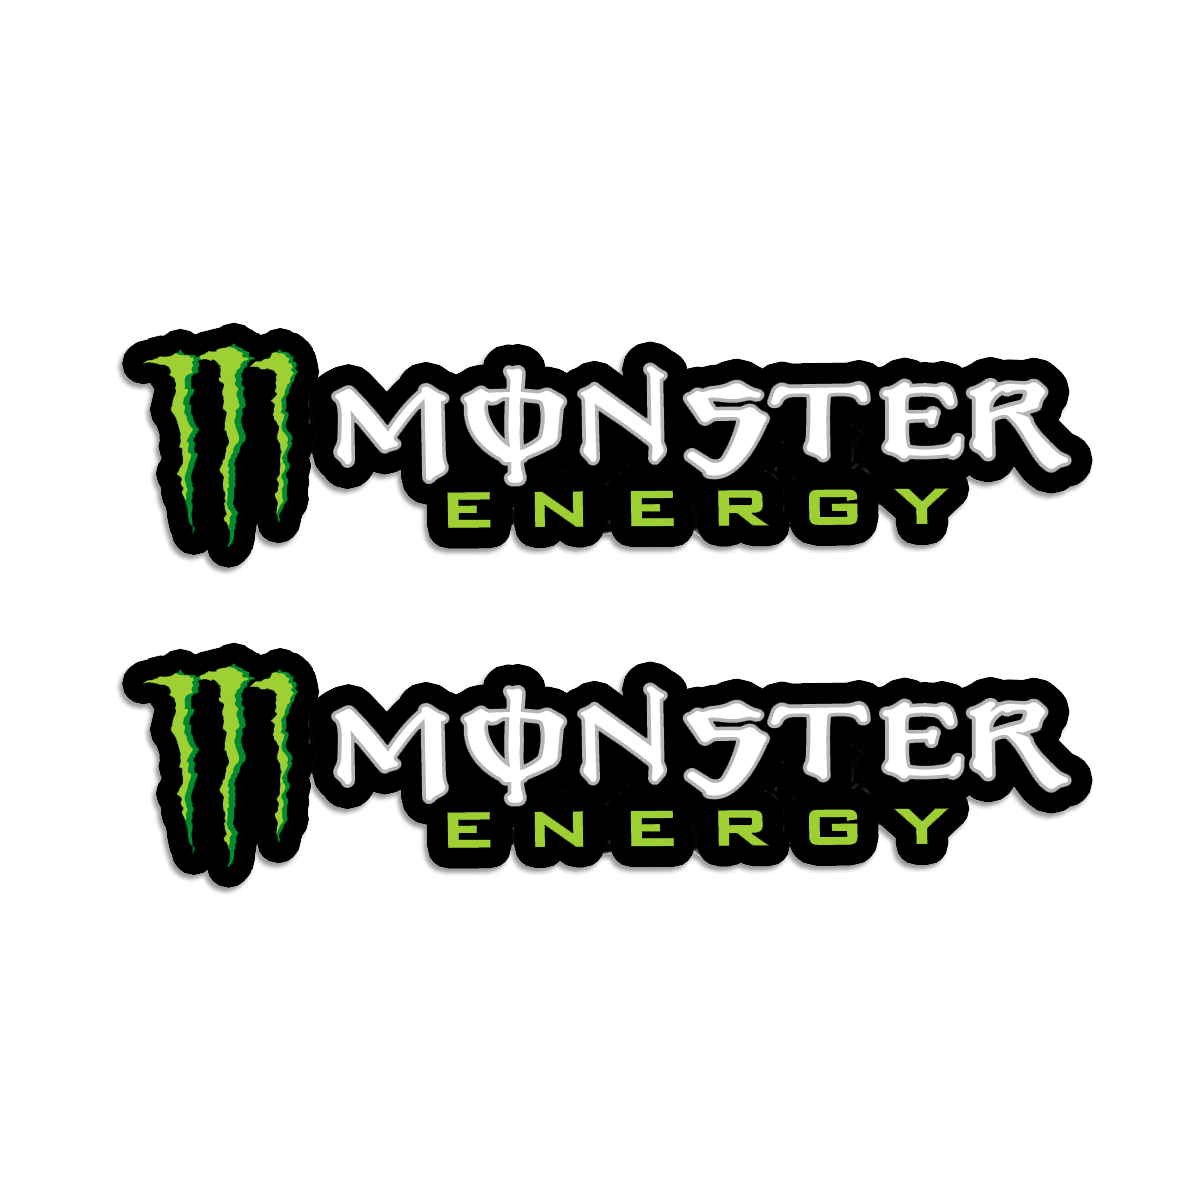 https://discontinueddecals.com/images/race_bike_decals_monster_energy_logo.jpg